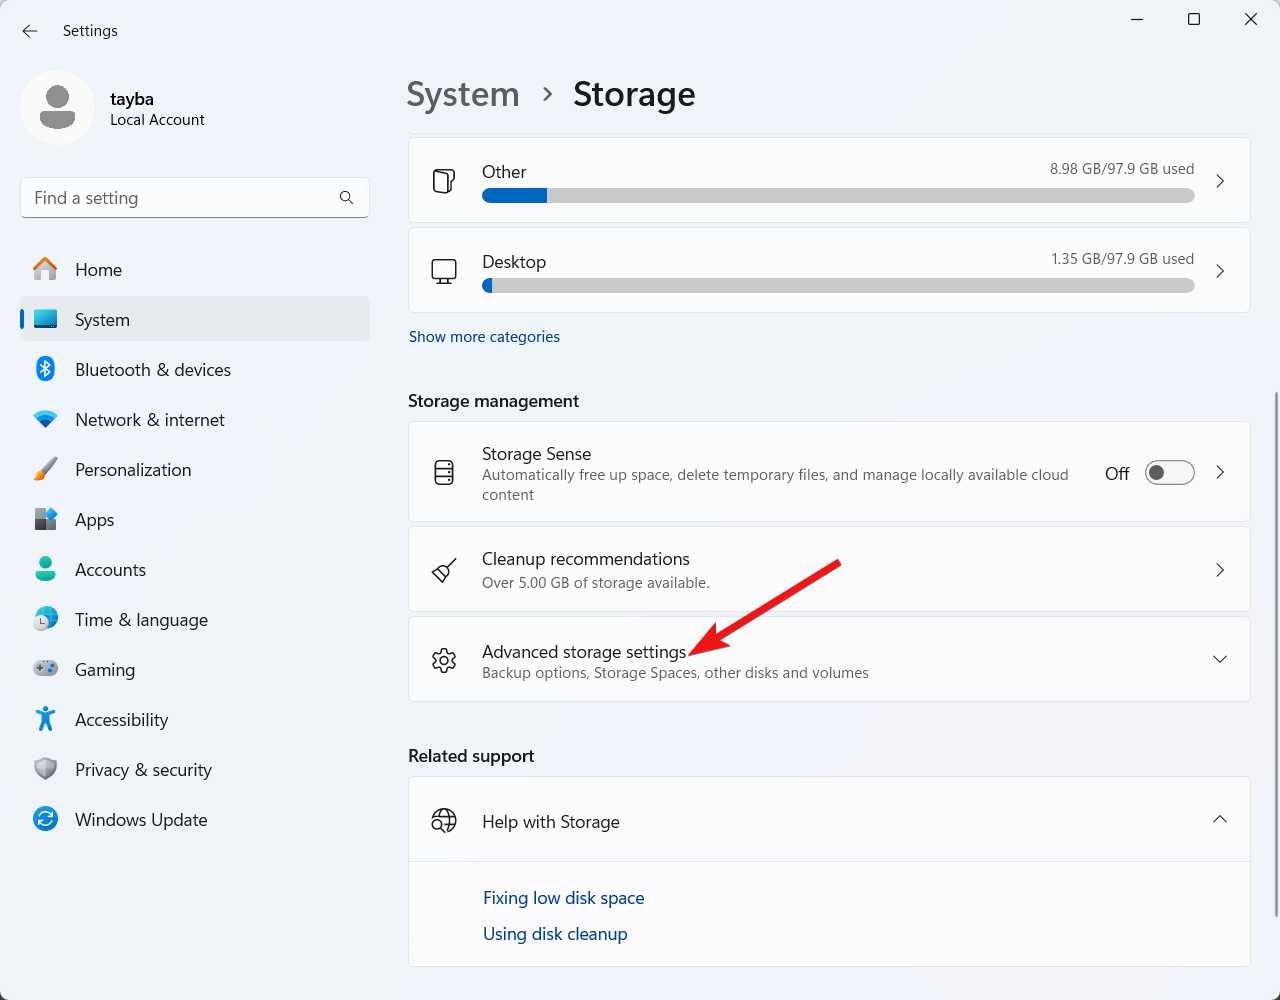 Select Advanced Storage settings